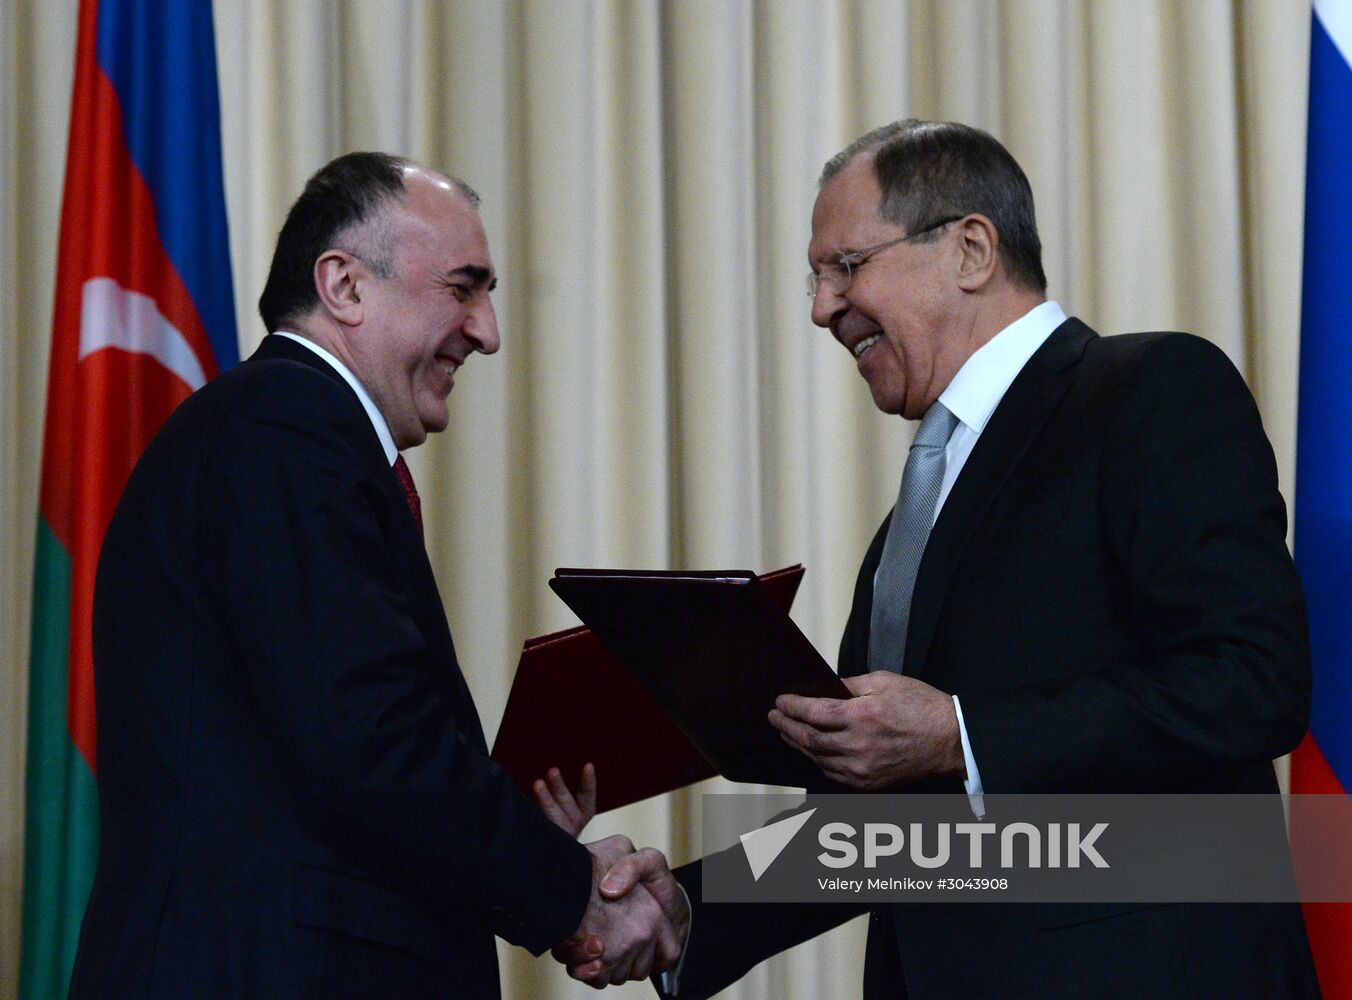 Russian Foreign Minister Sergei Lavrov meets with his Azerbaijani counterpart Elmar Mammadyarov